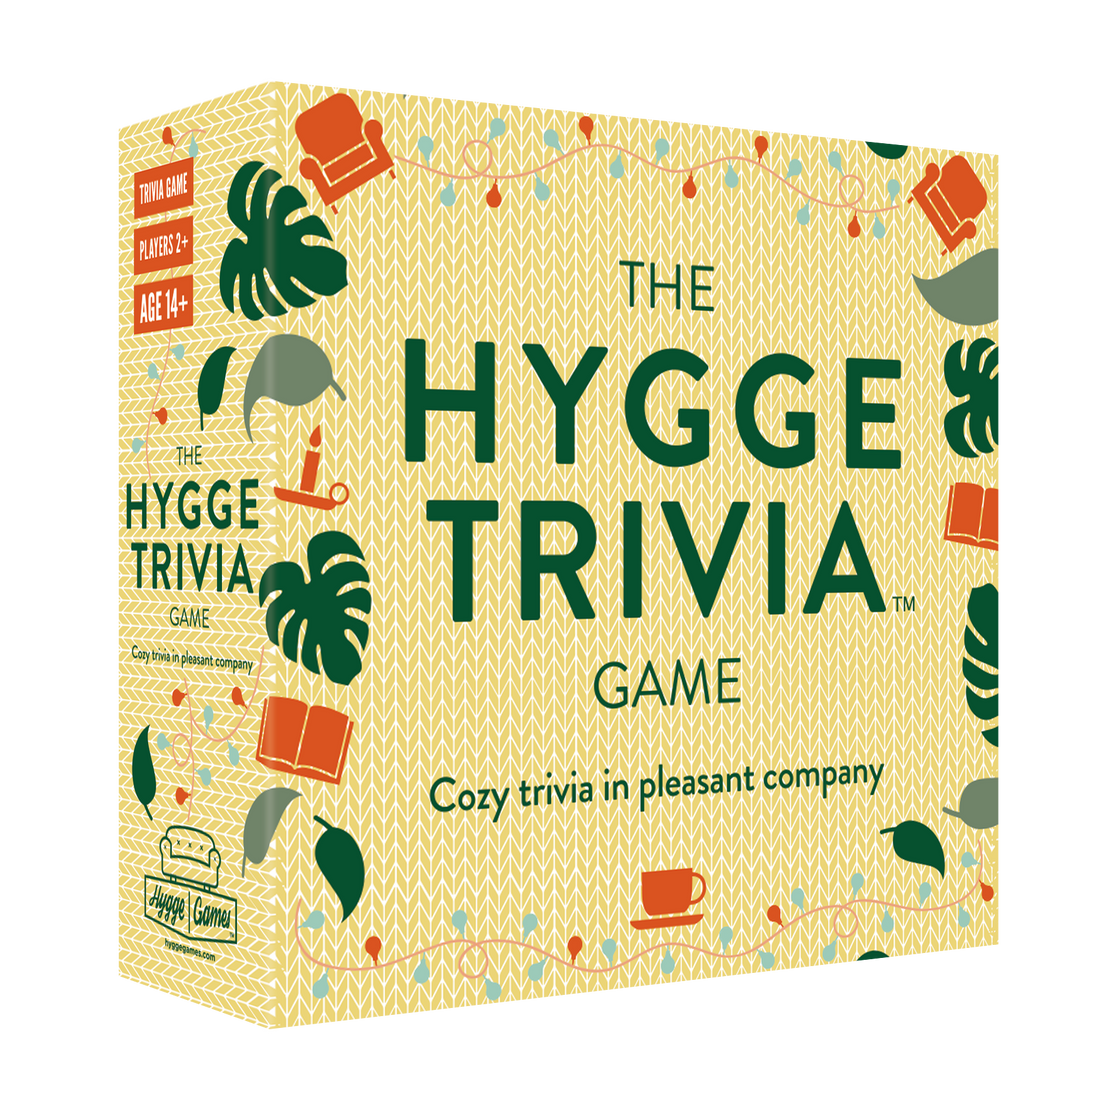 The Hygge Trivia Game